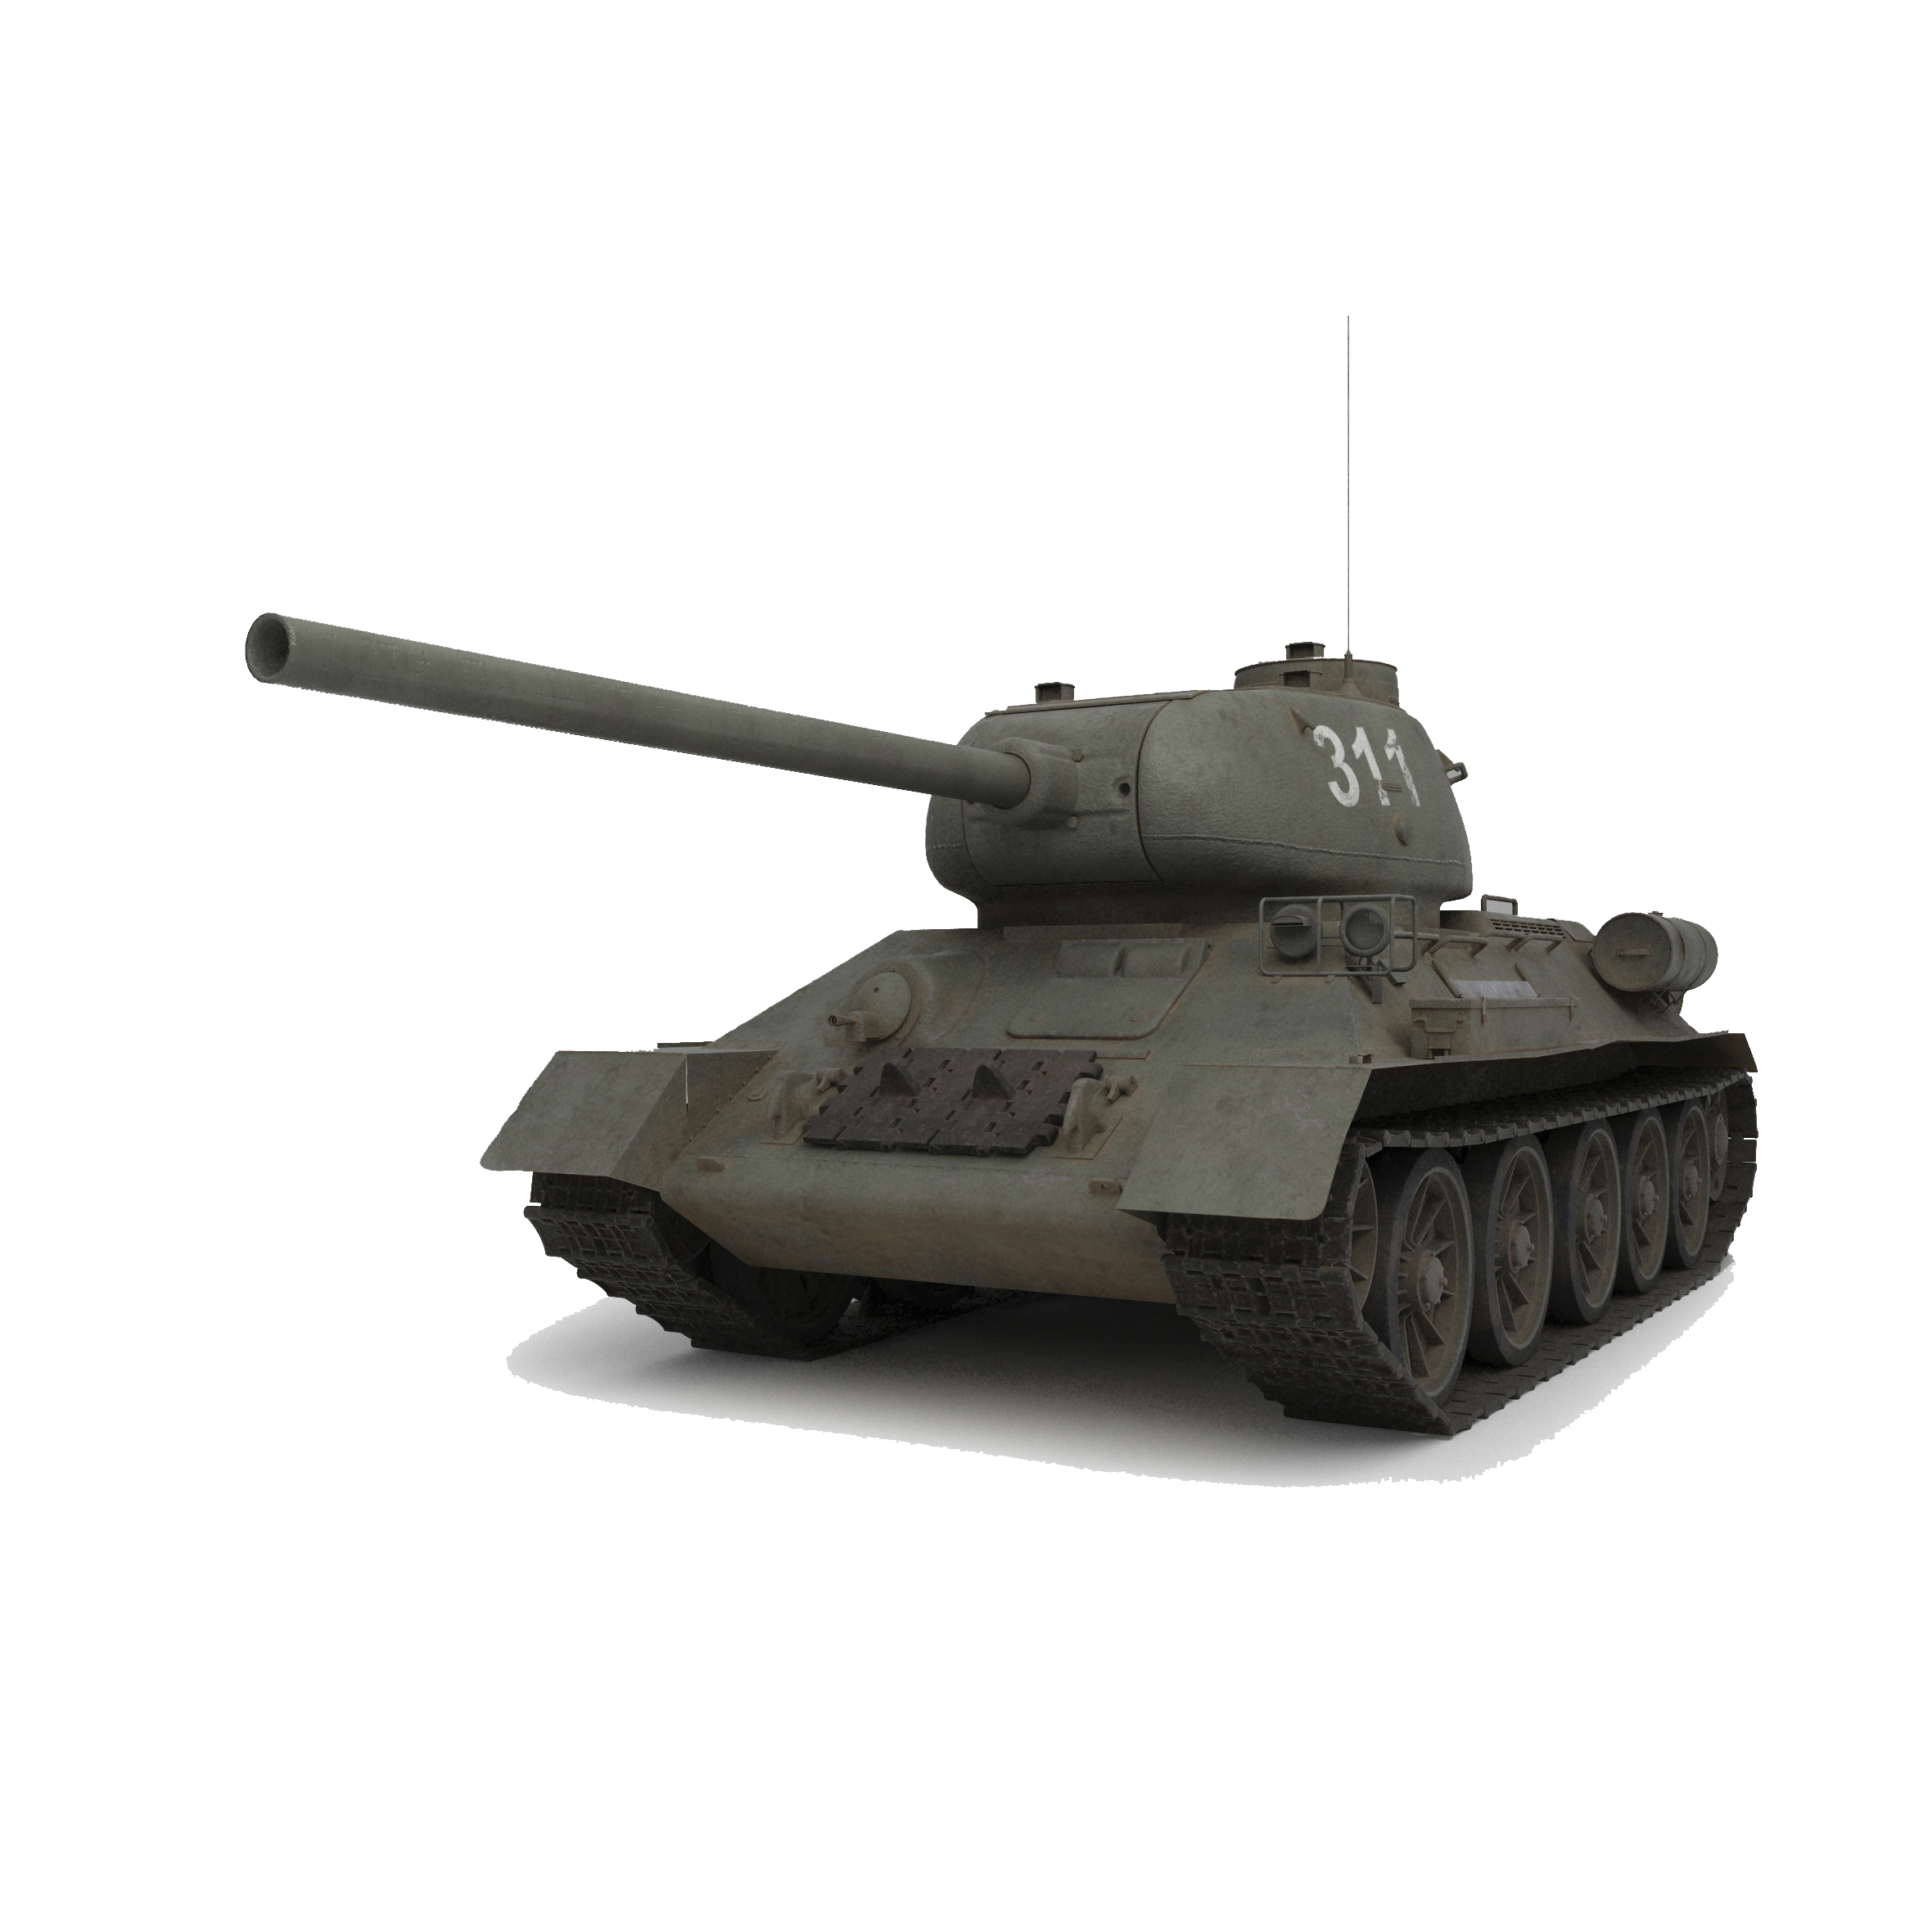 Tank PNG